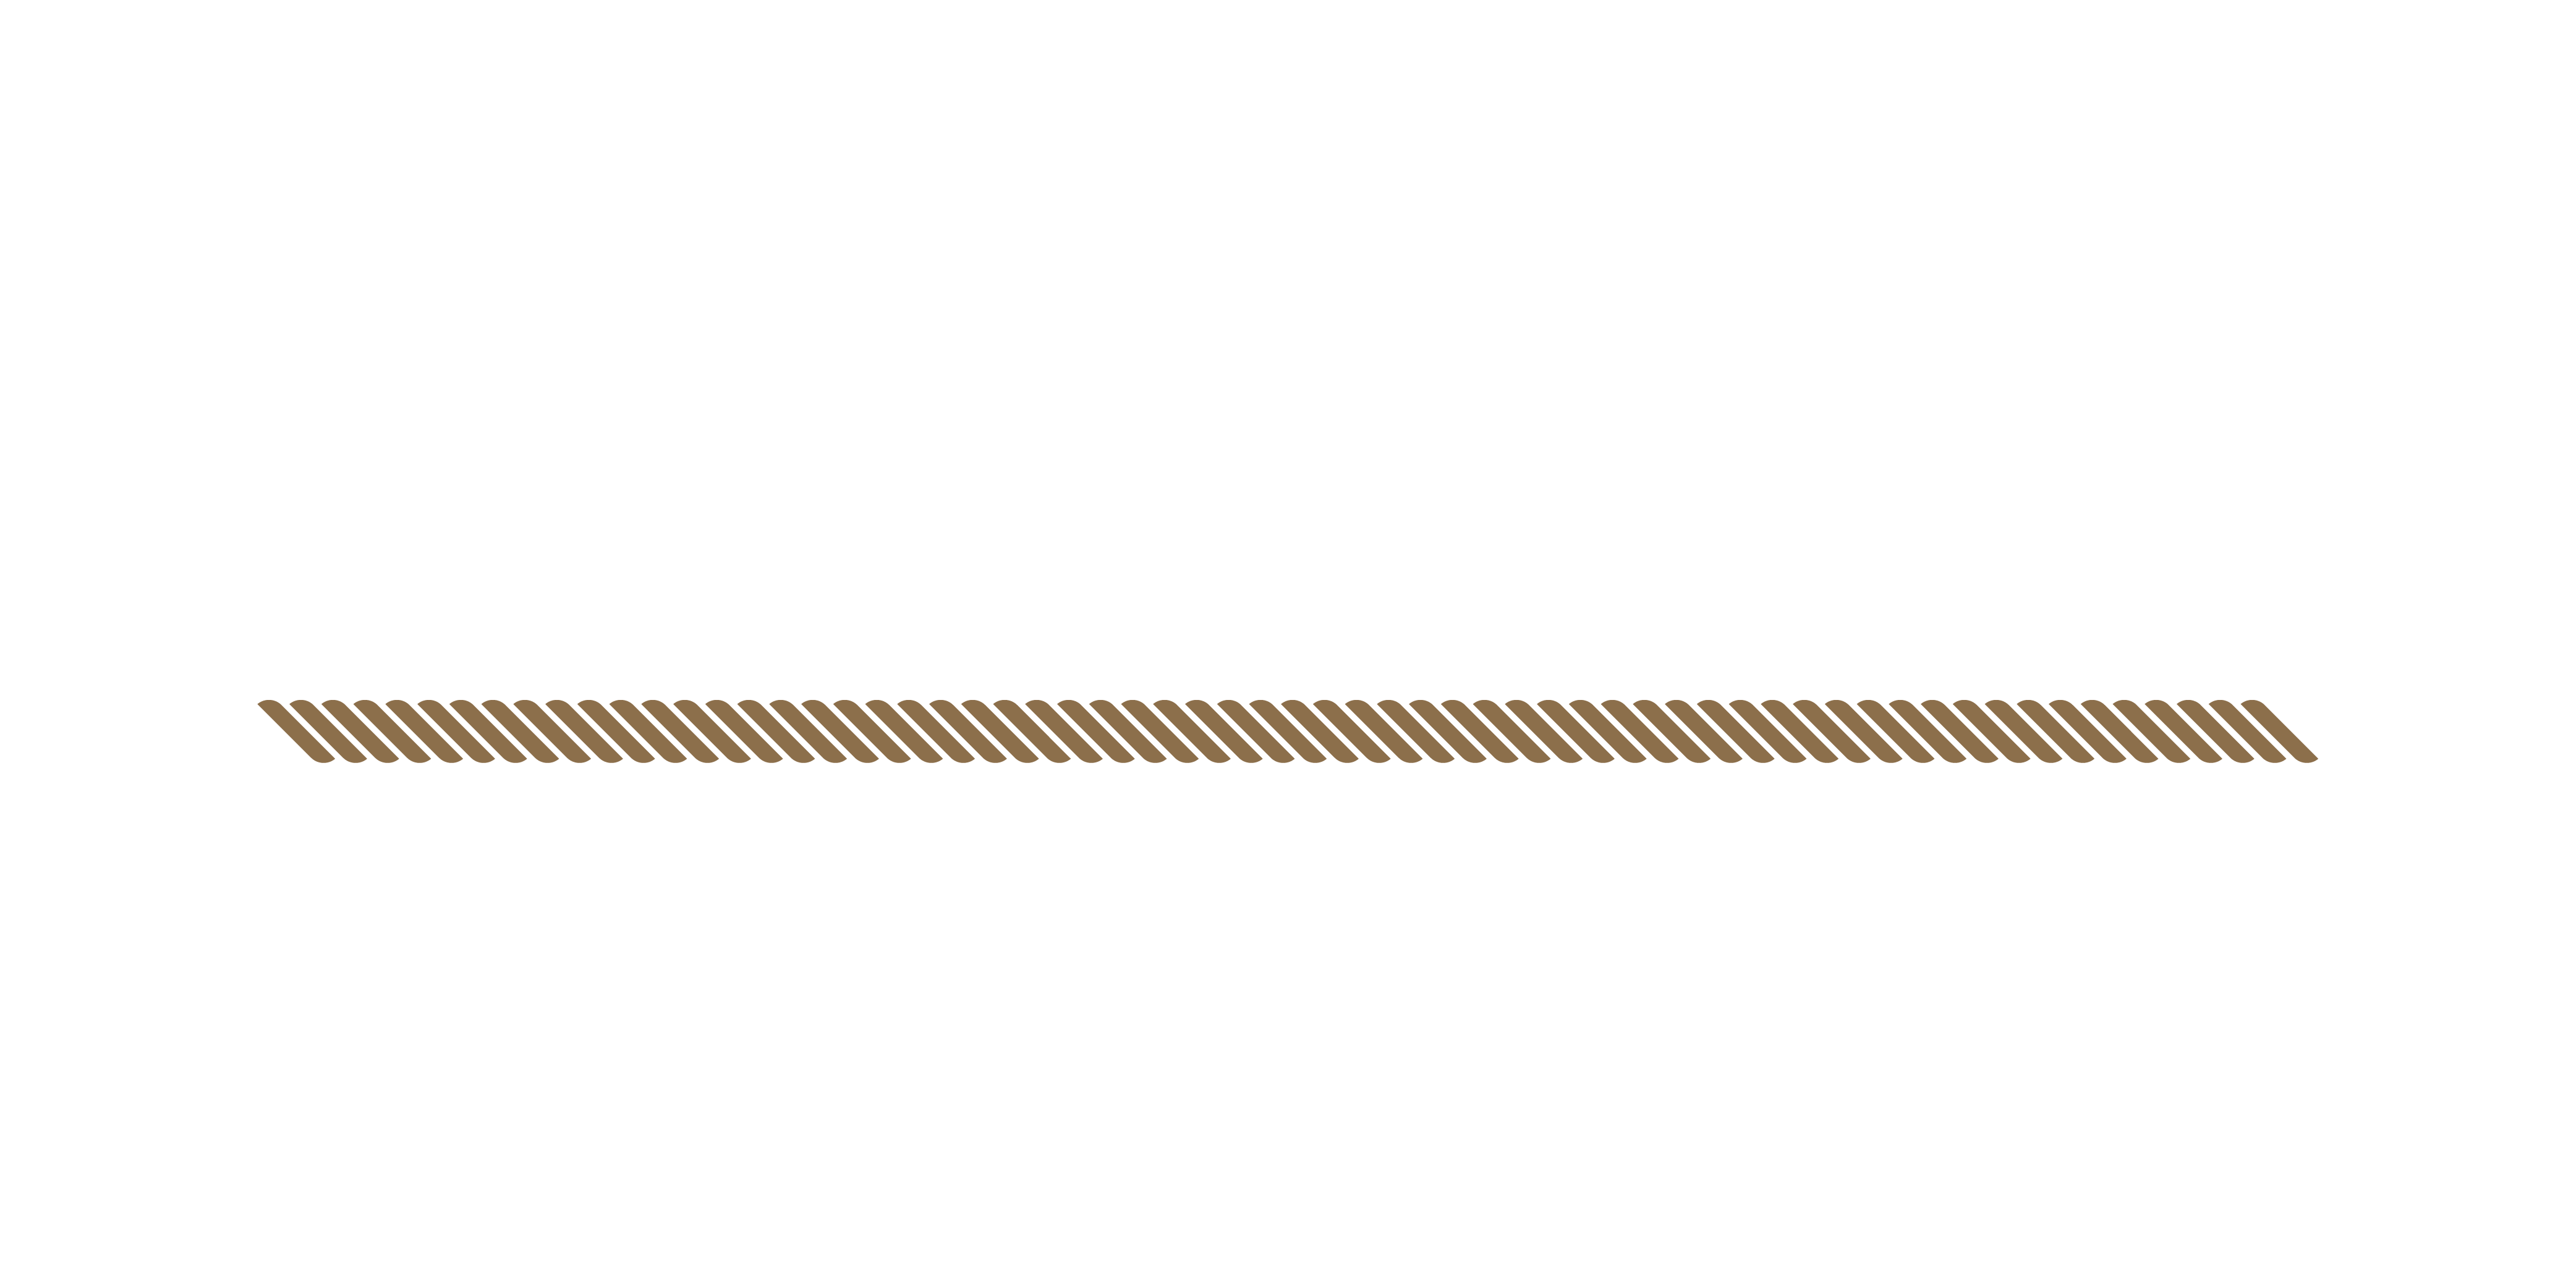 Bofort - logo - wit